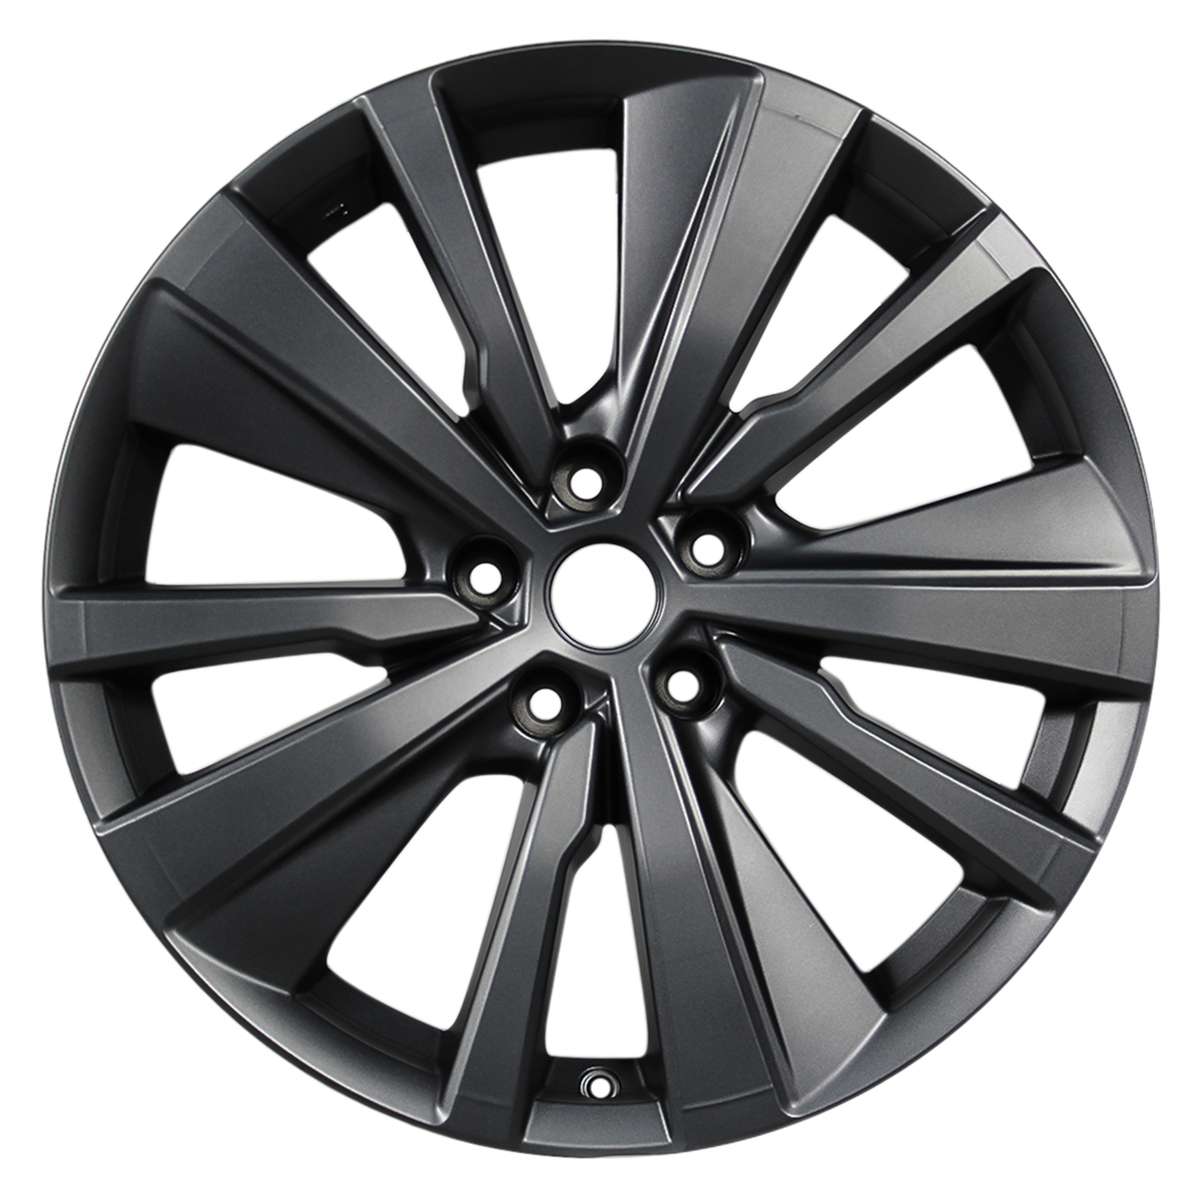 2019 Nissan Altima New 19" Replacement Wheel Rim RW62785C